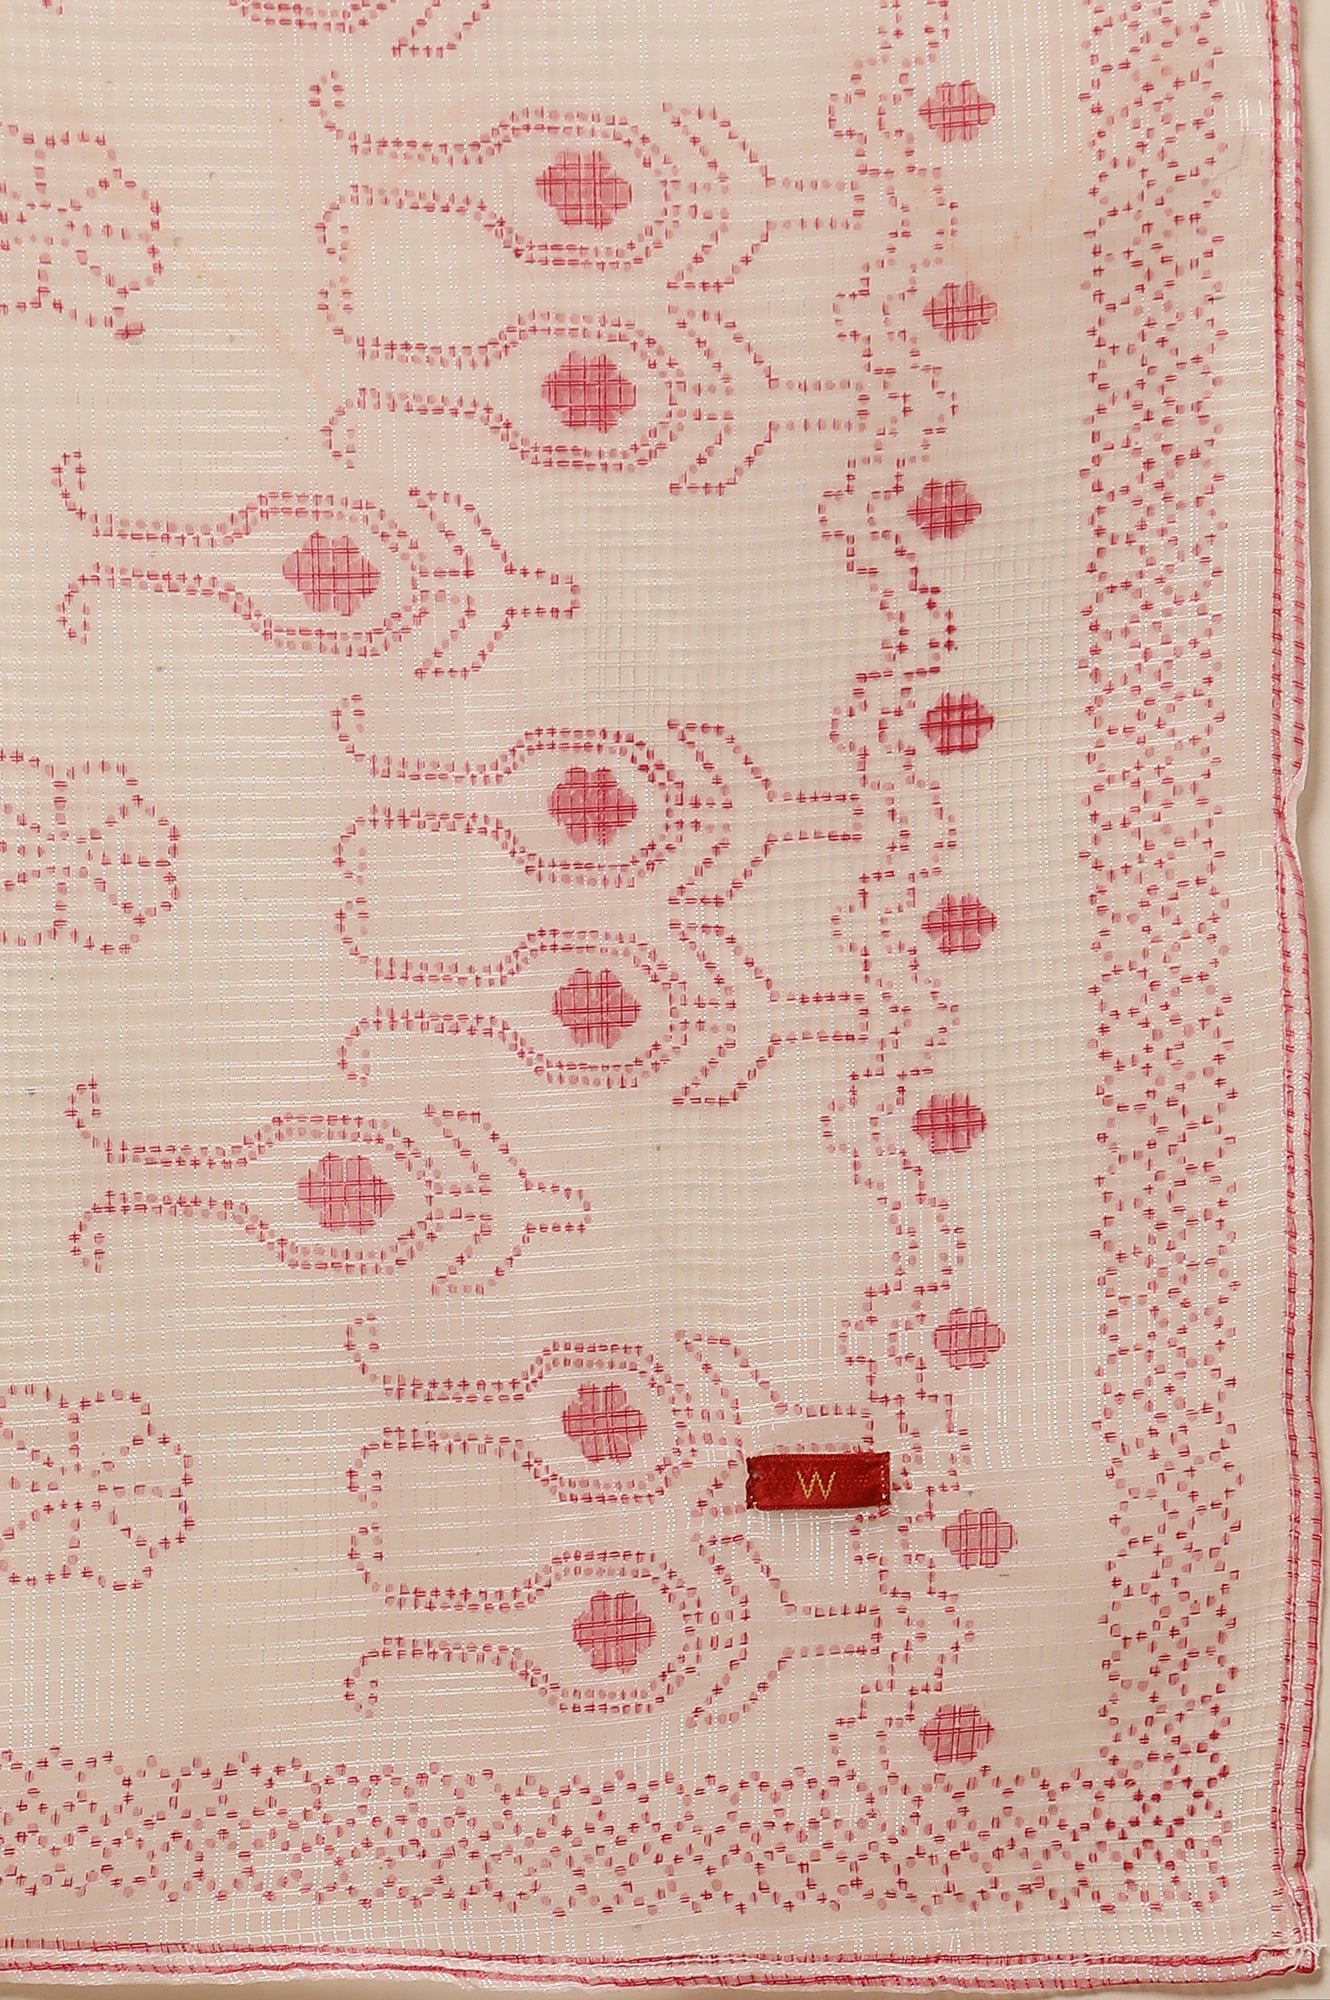 Pink Embroidered Textured Kurta, Pants And Dupatta Set